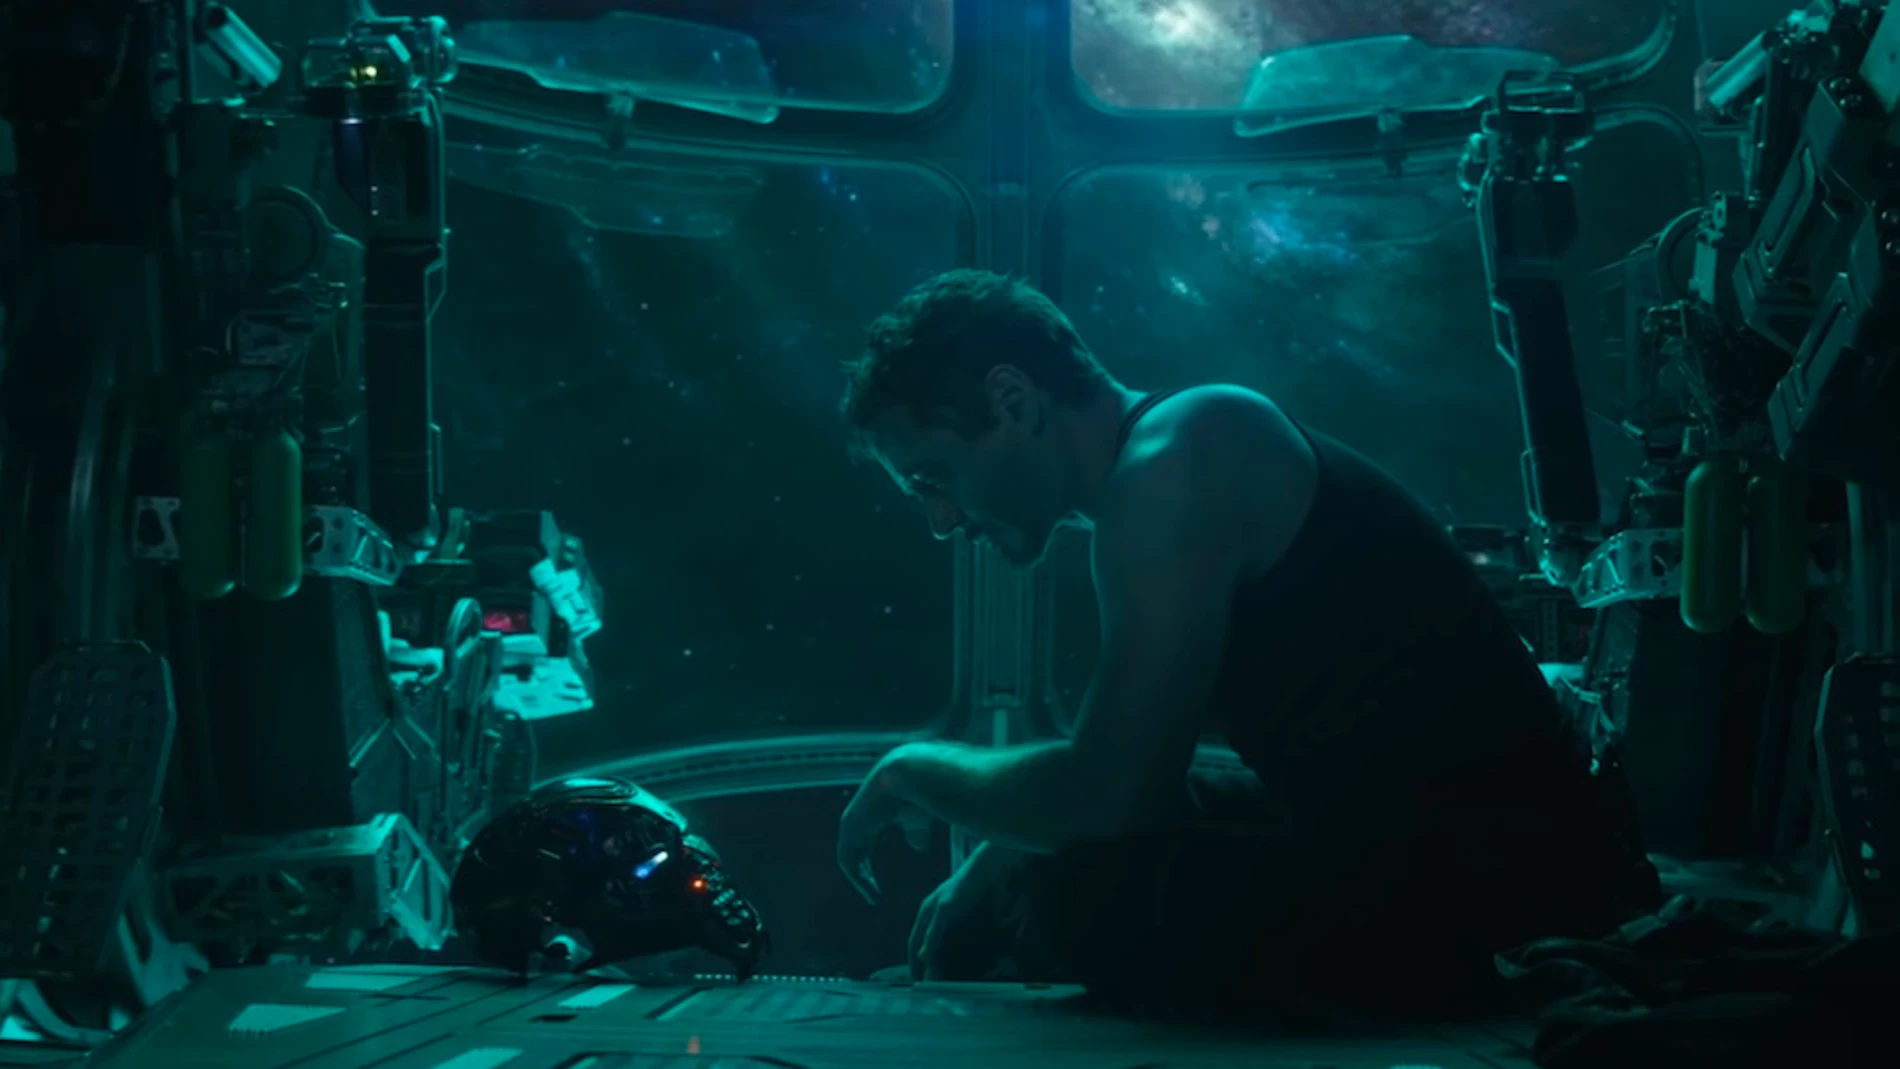 Tony Stark en 'Vengadores: Endgame'